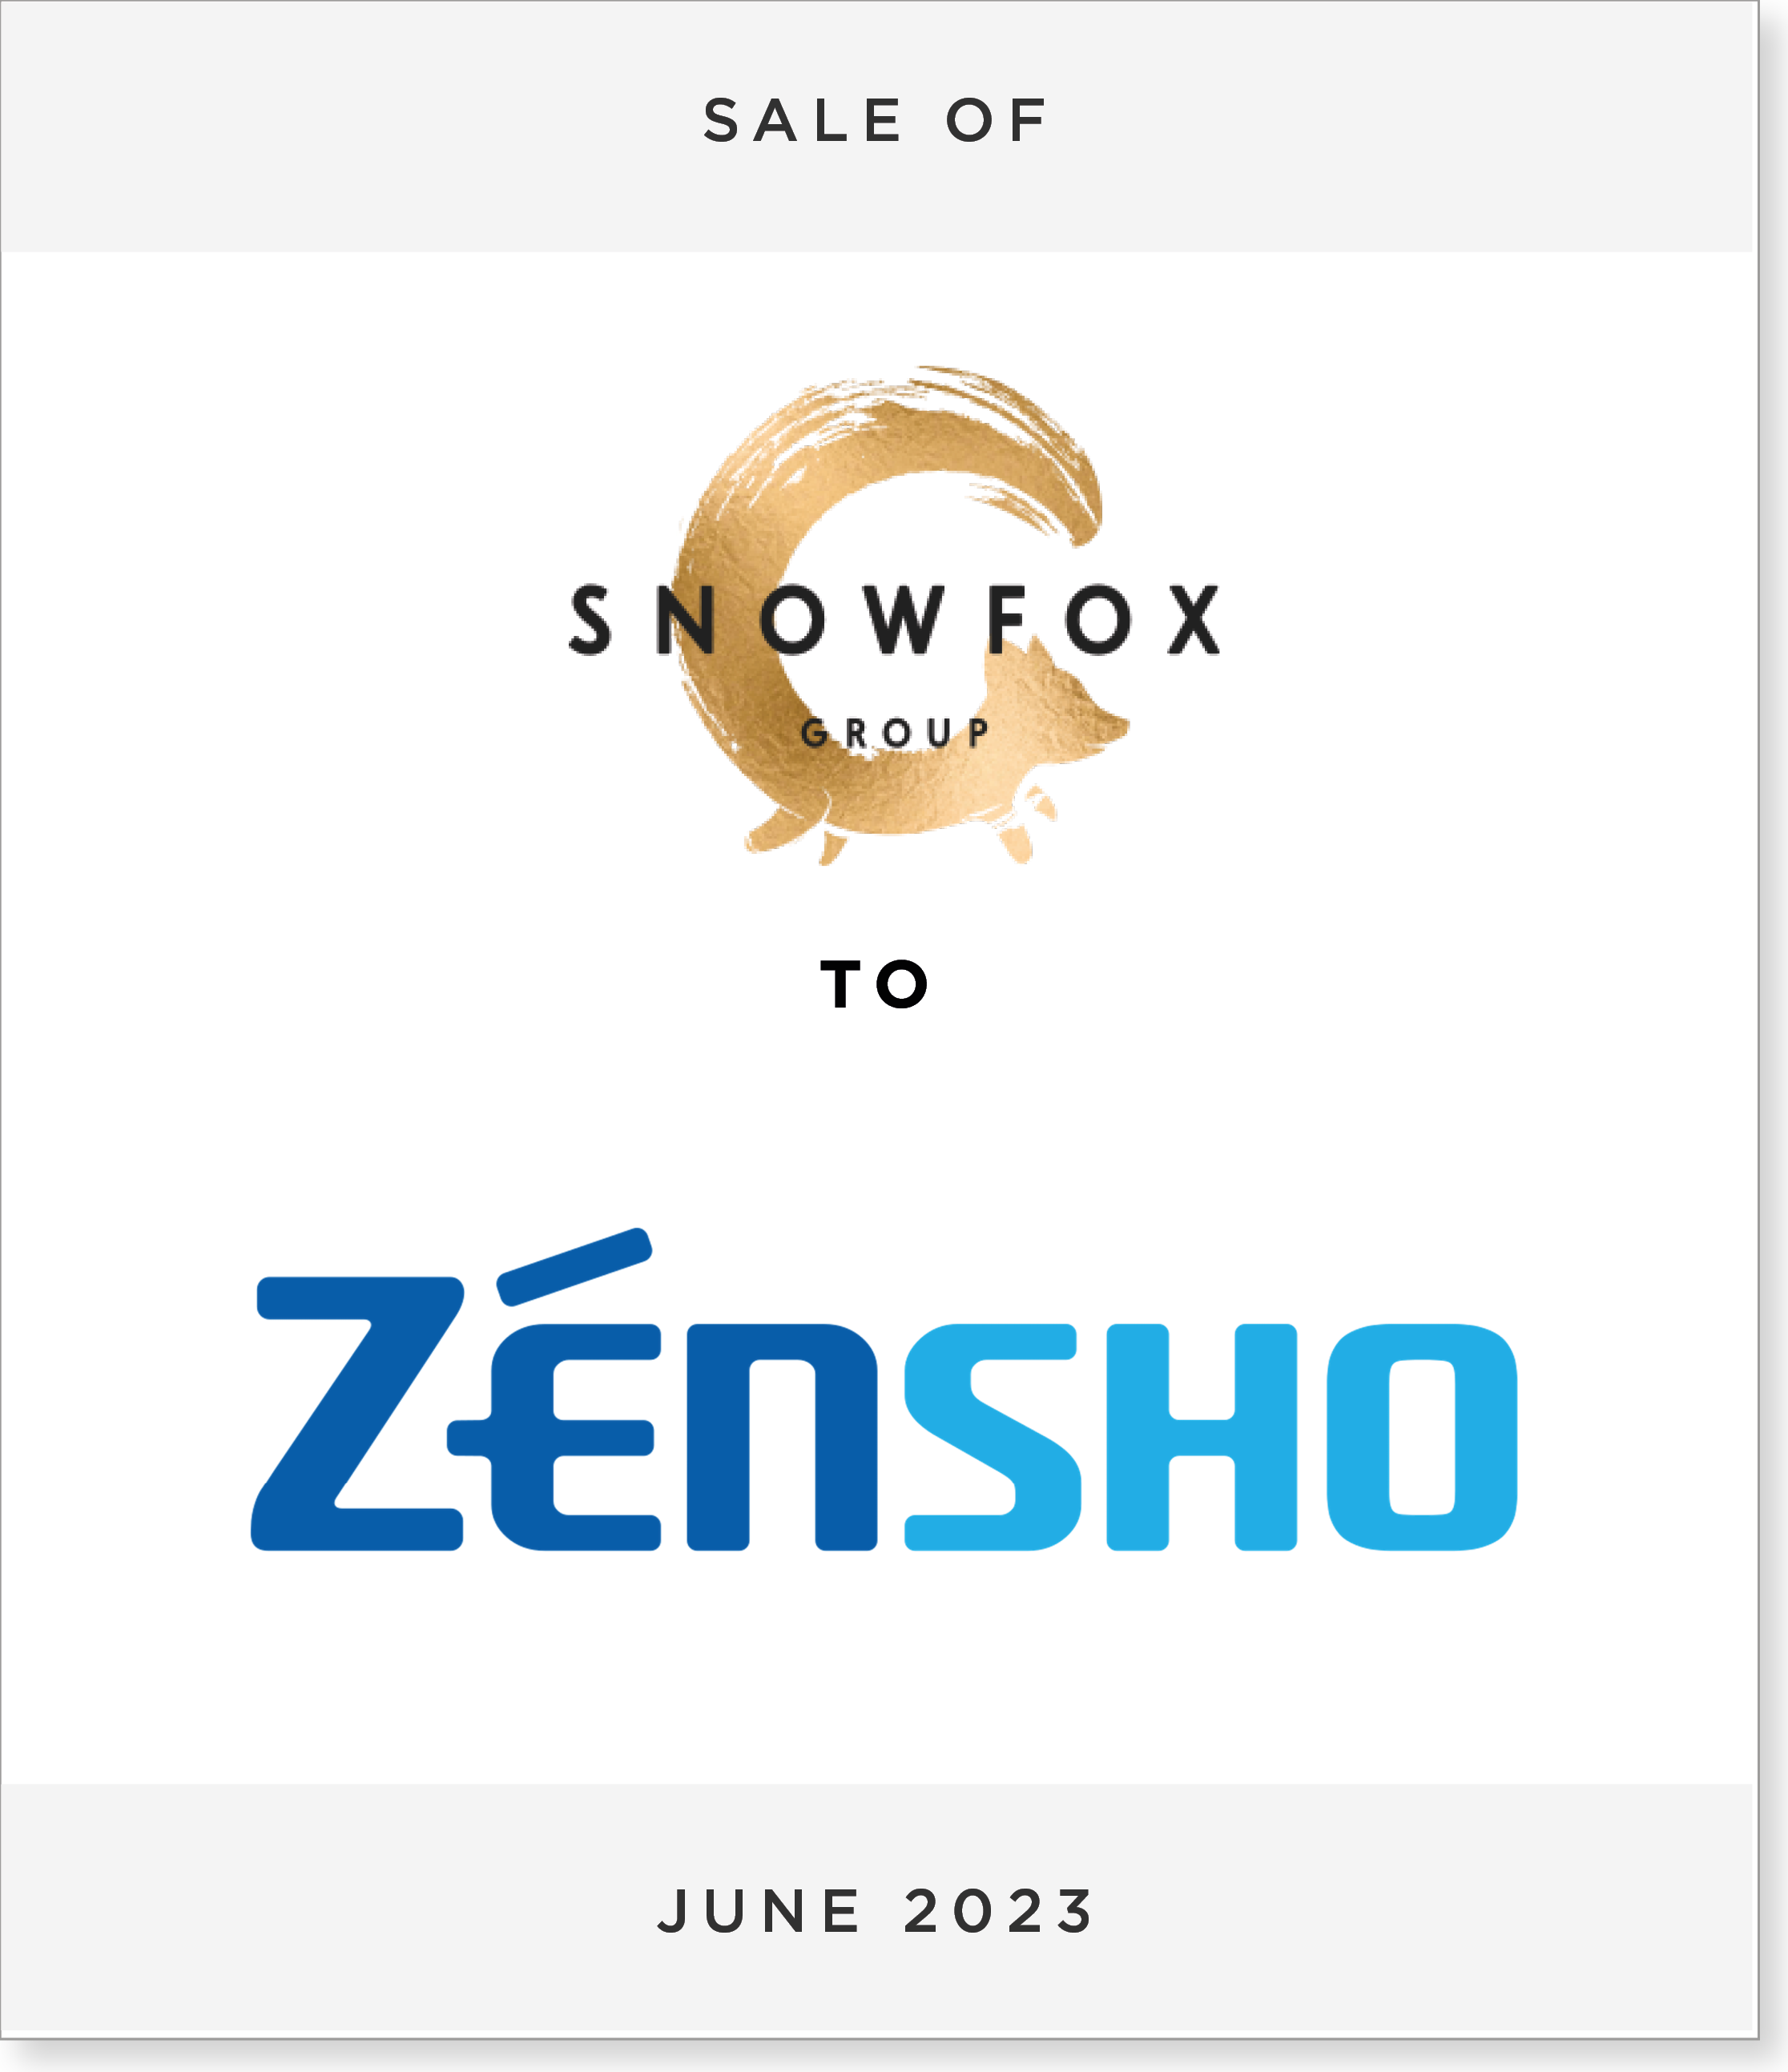 SnowfoxZensho_Mayfair Sale of Snowfox Group to Zensho Holdings